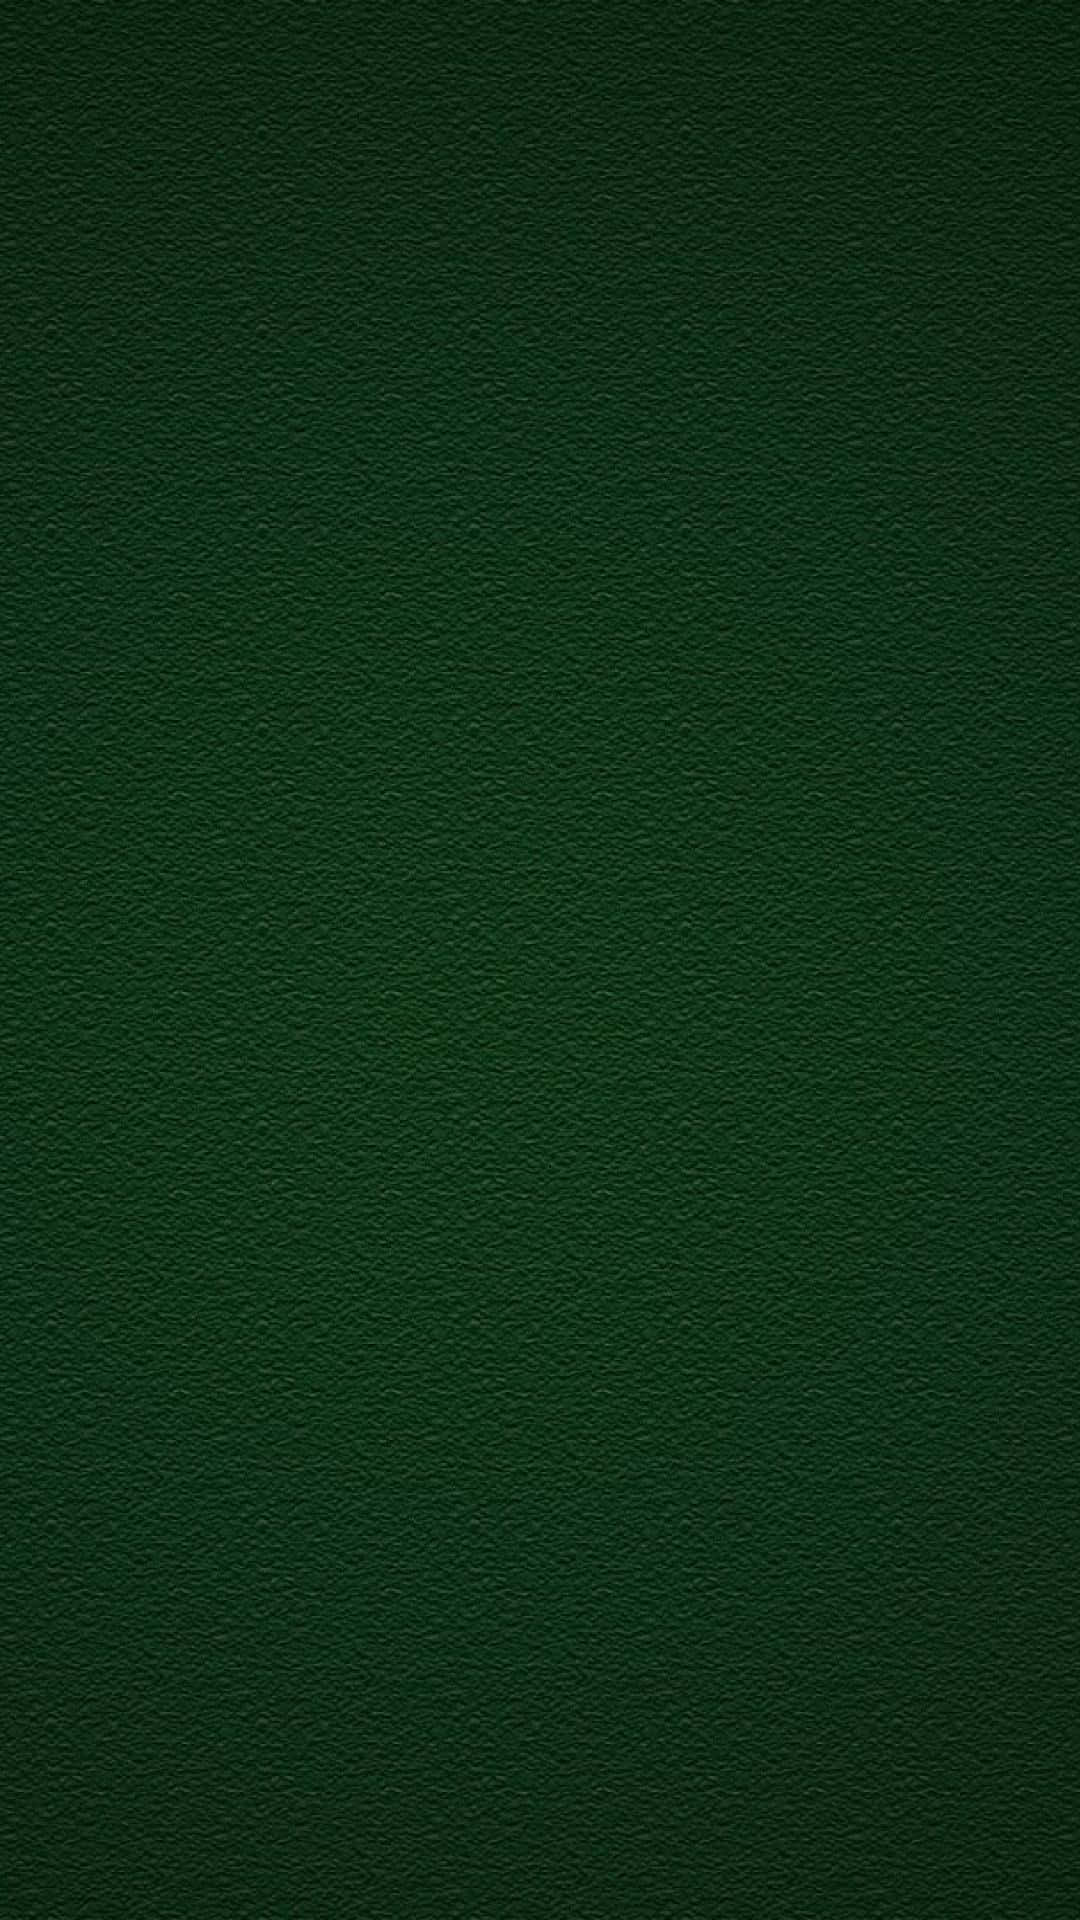 Vibrant Green Phone Background